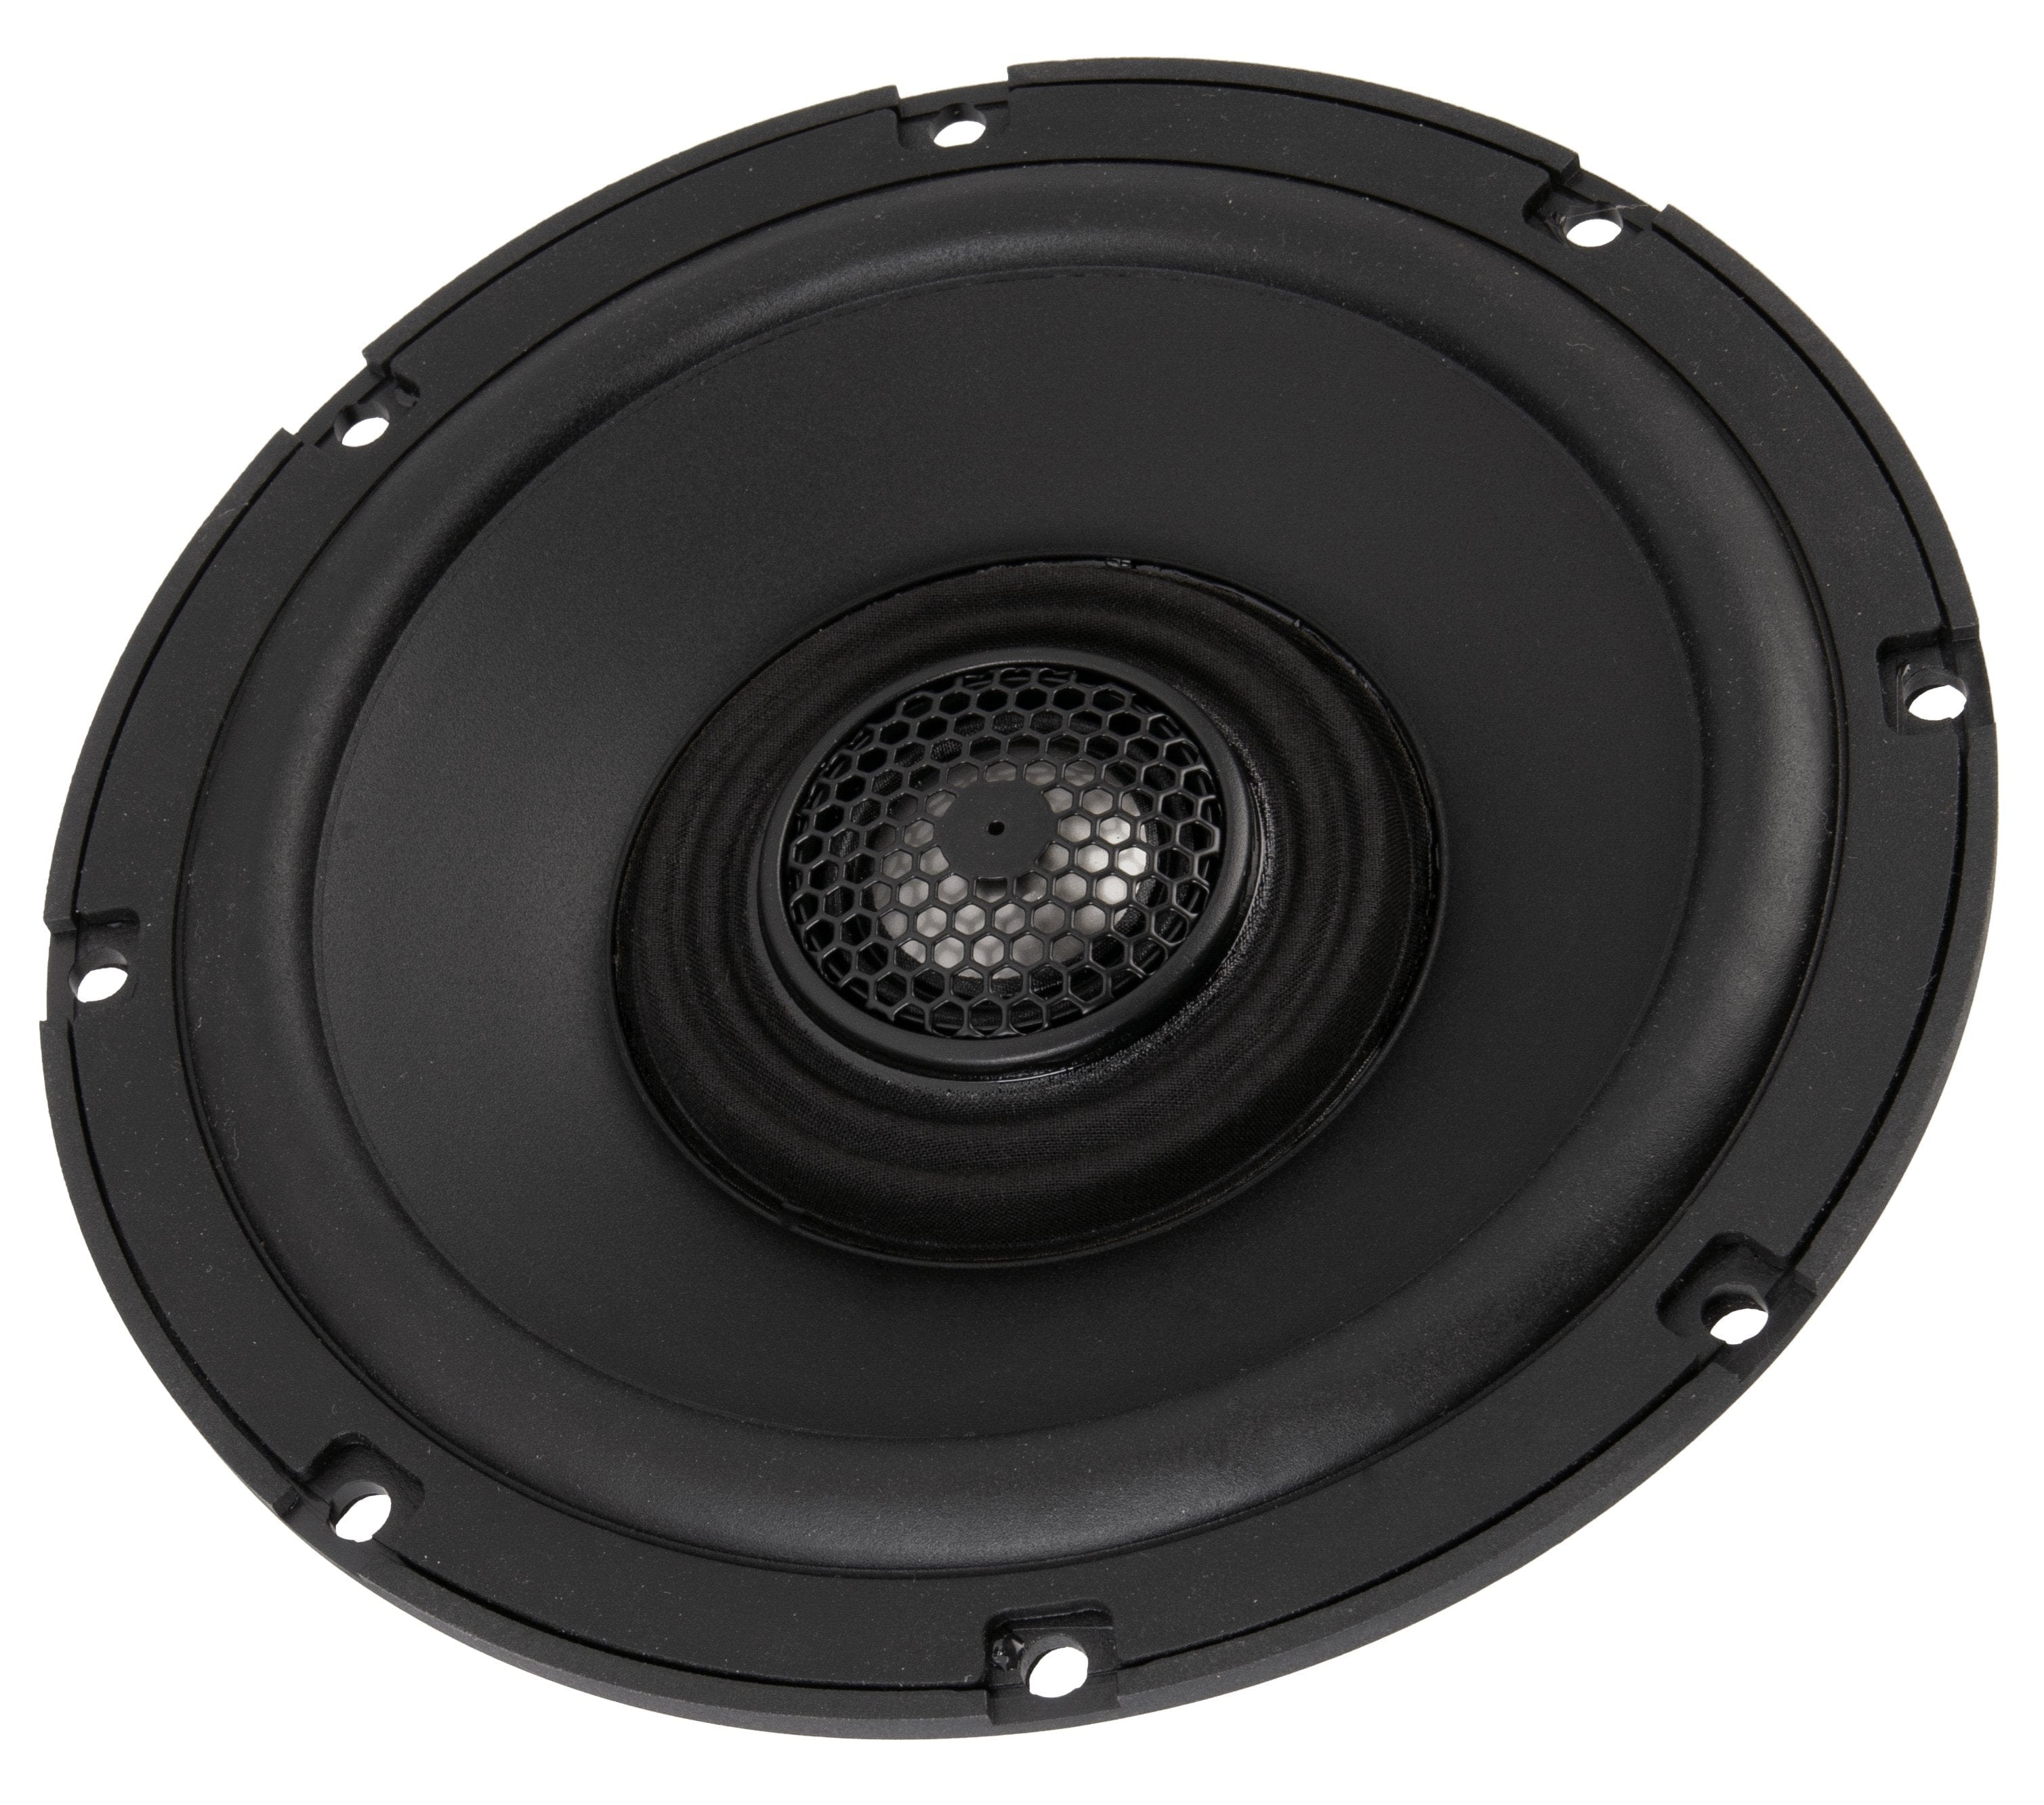 Soundstream Audio - Speakers Soundstream Premium 6.5" Motorcycle Speaker Pair